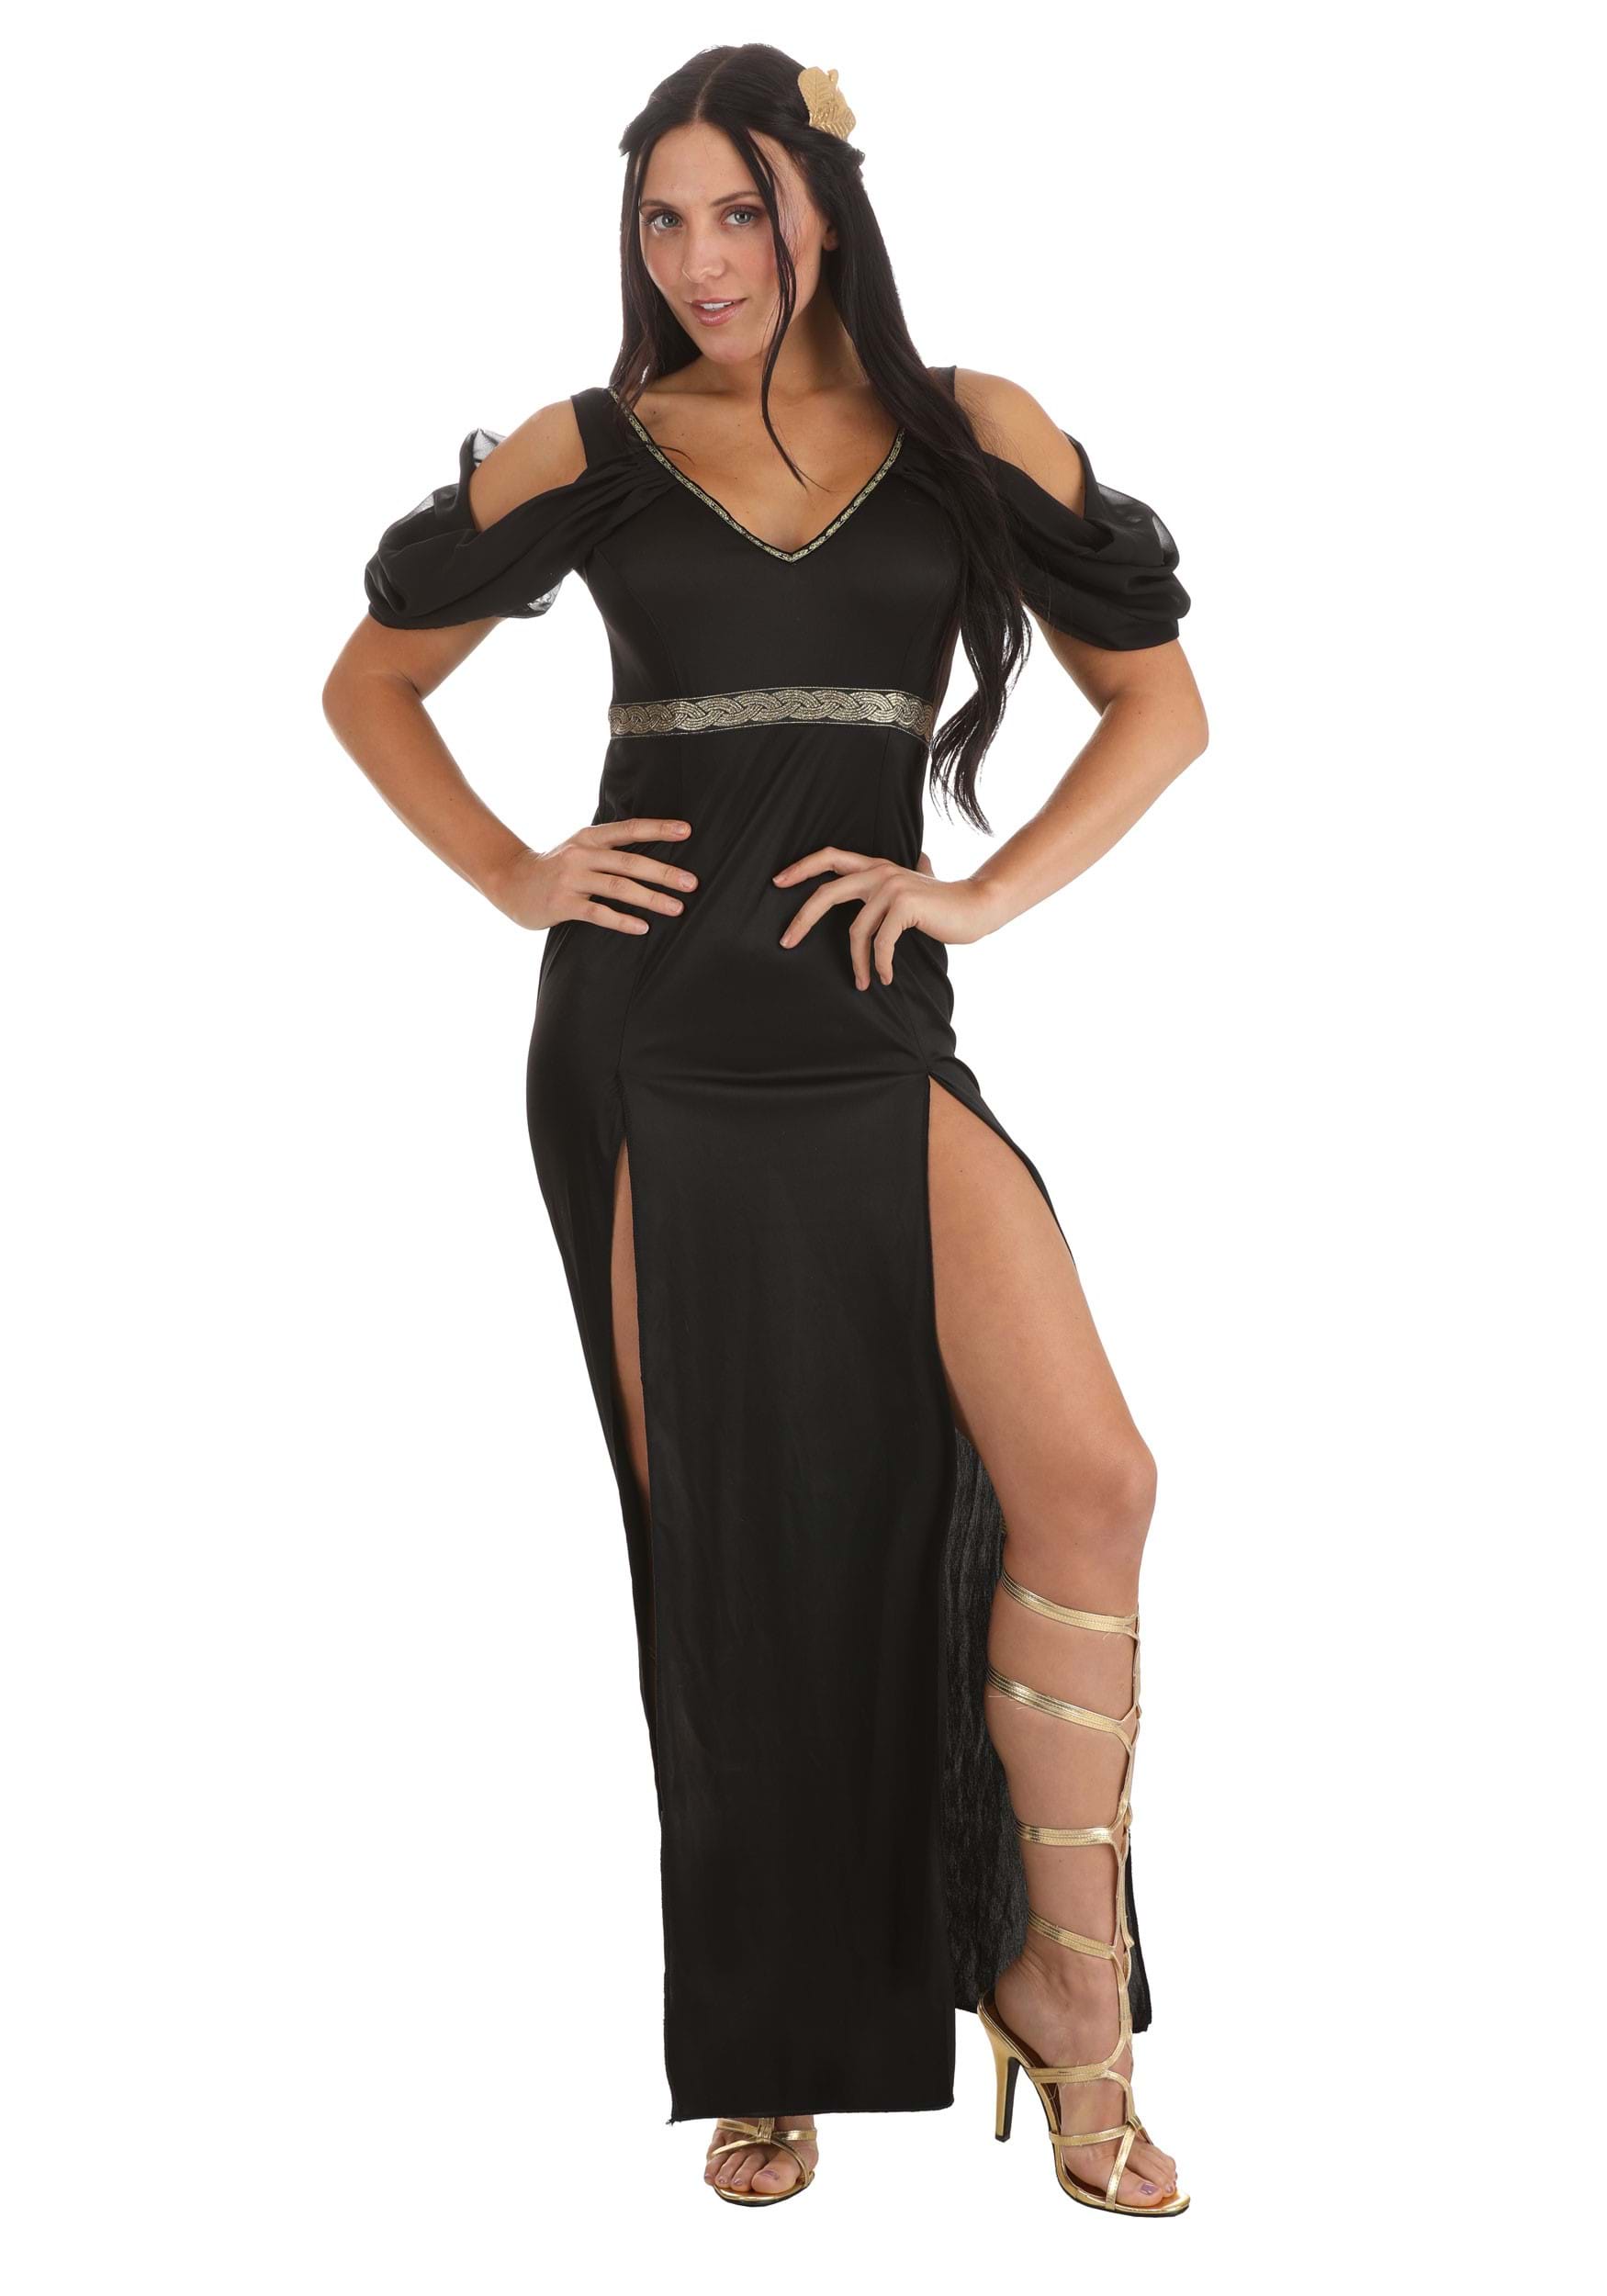 Women's Dark Goddess Costume Dress